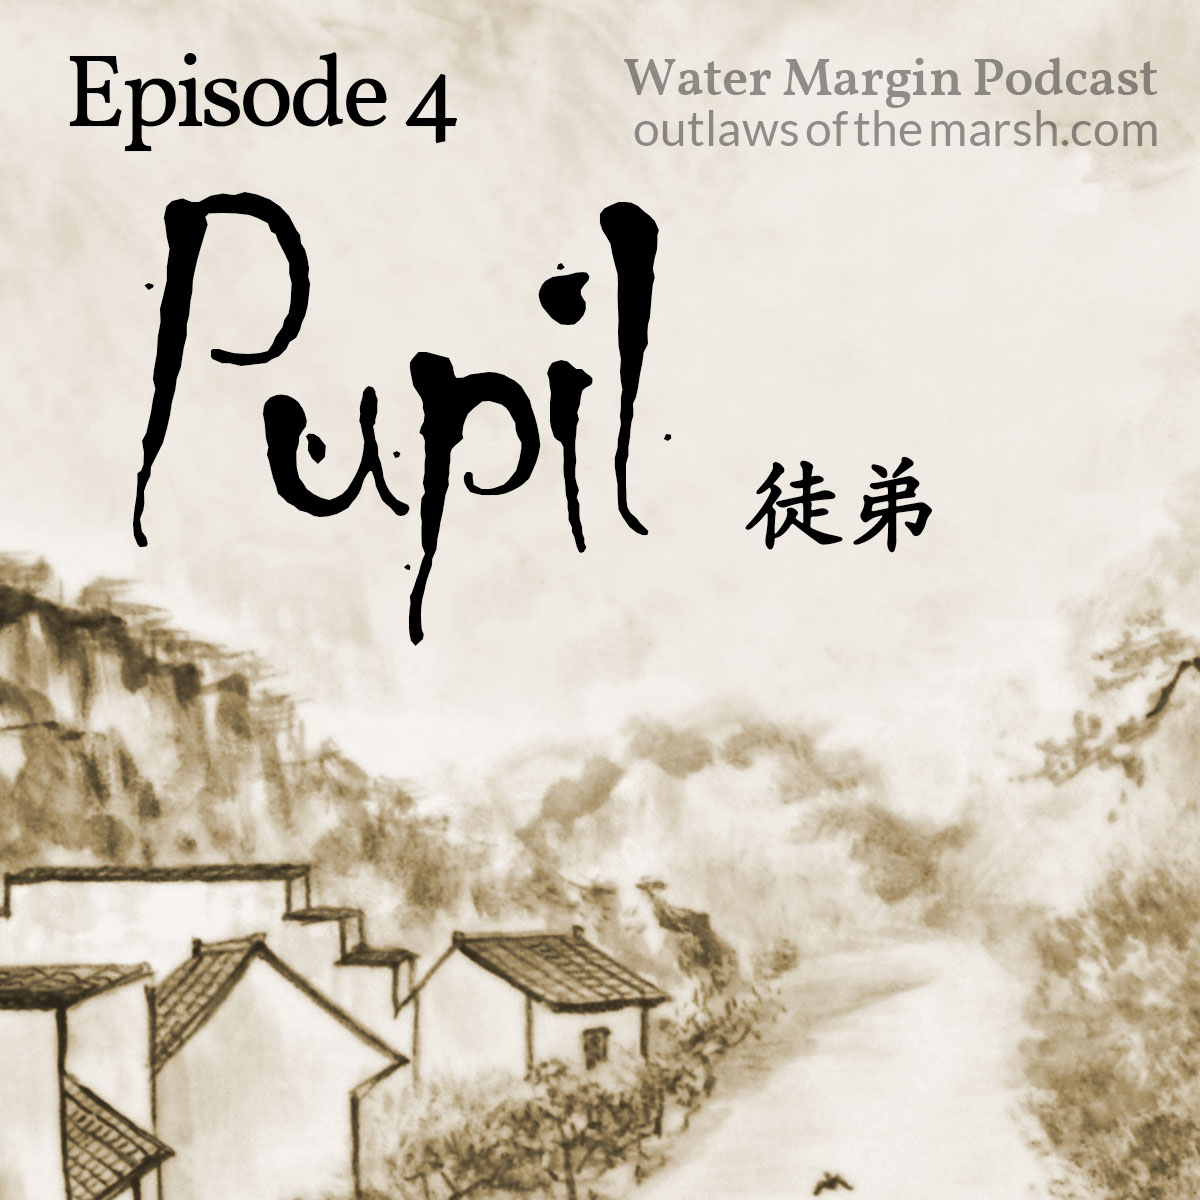 Water Margin Podcast: Episode 4